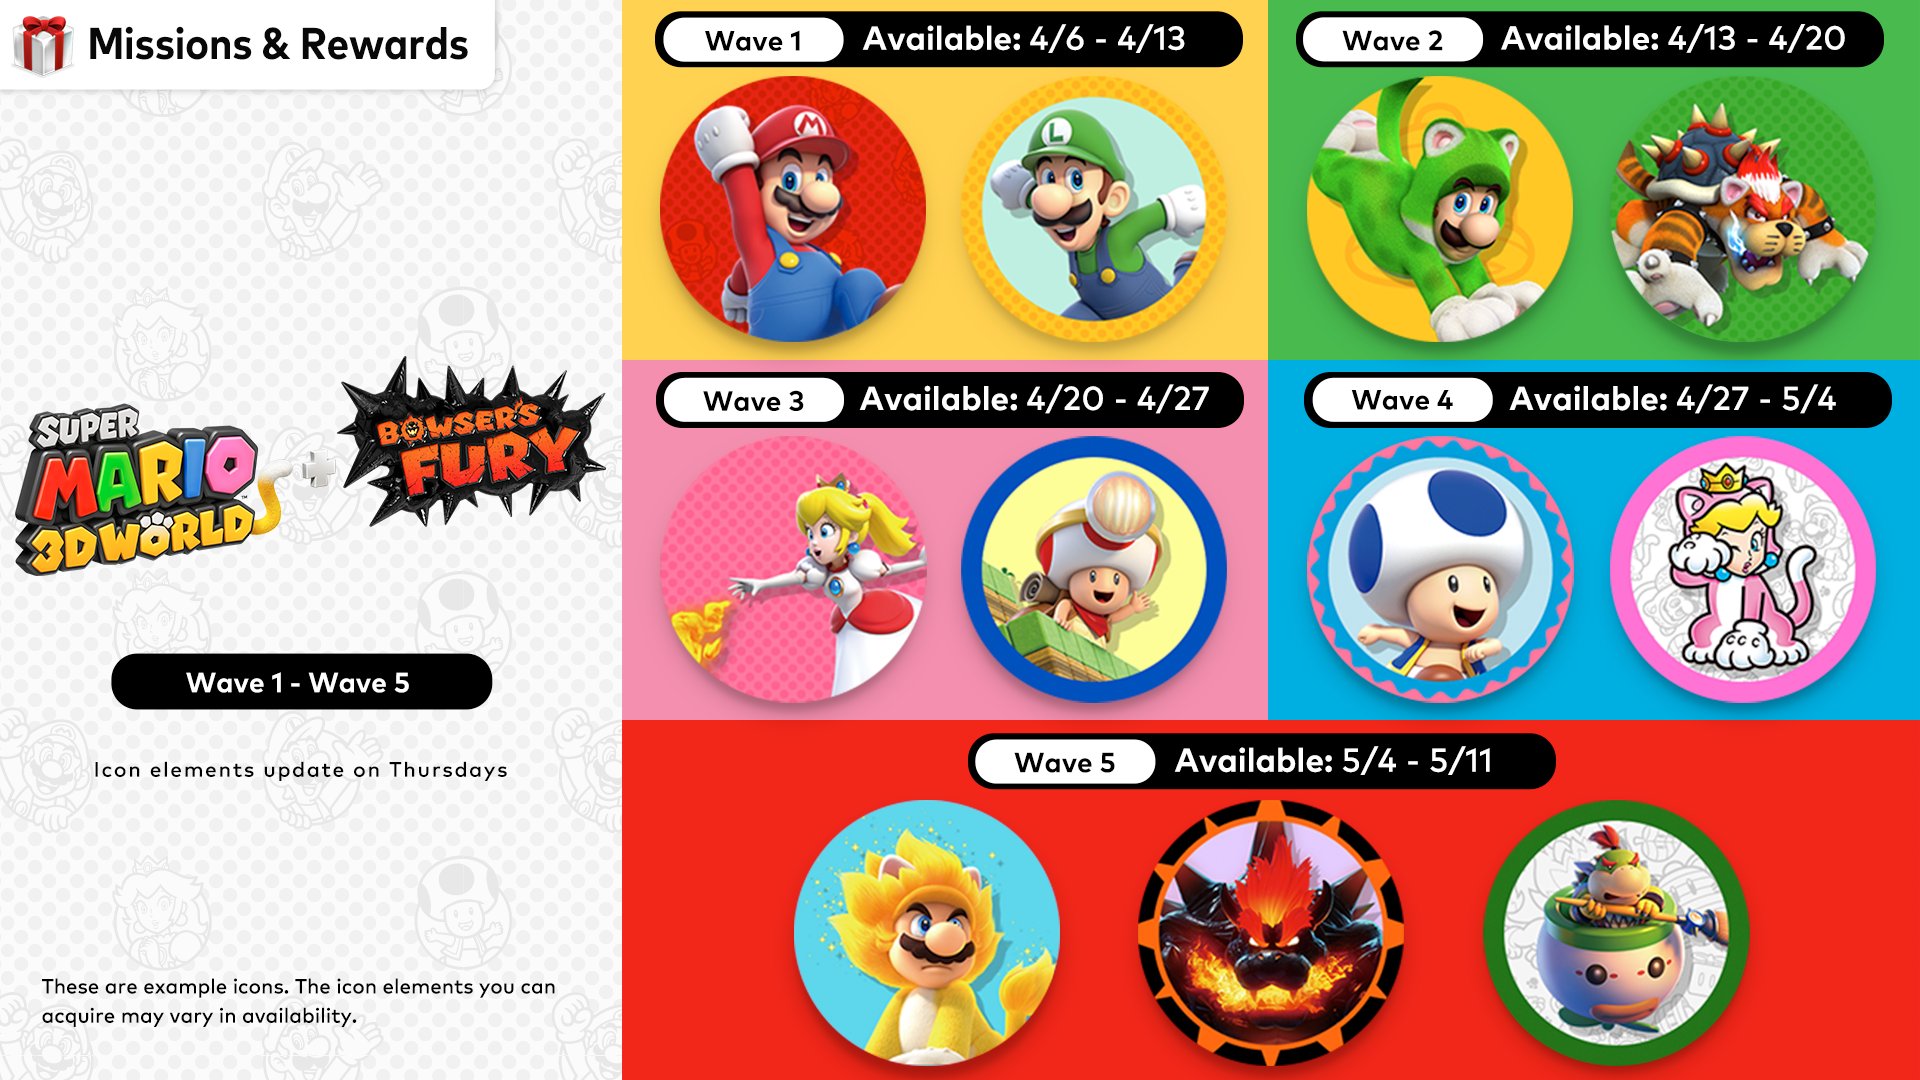 When will Super Mario World come to Nintendo Switch Online?